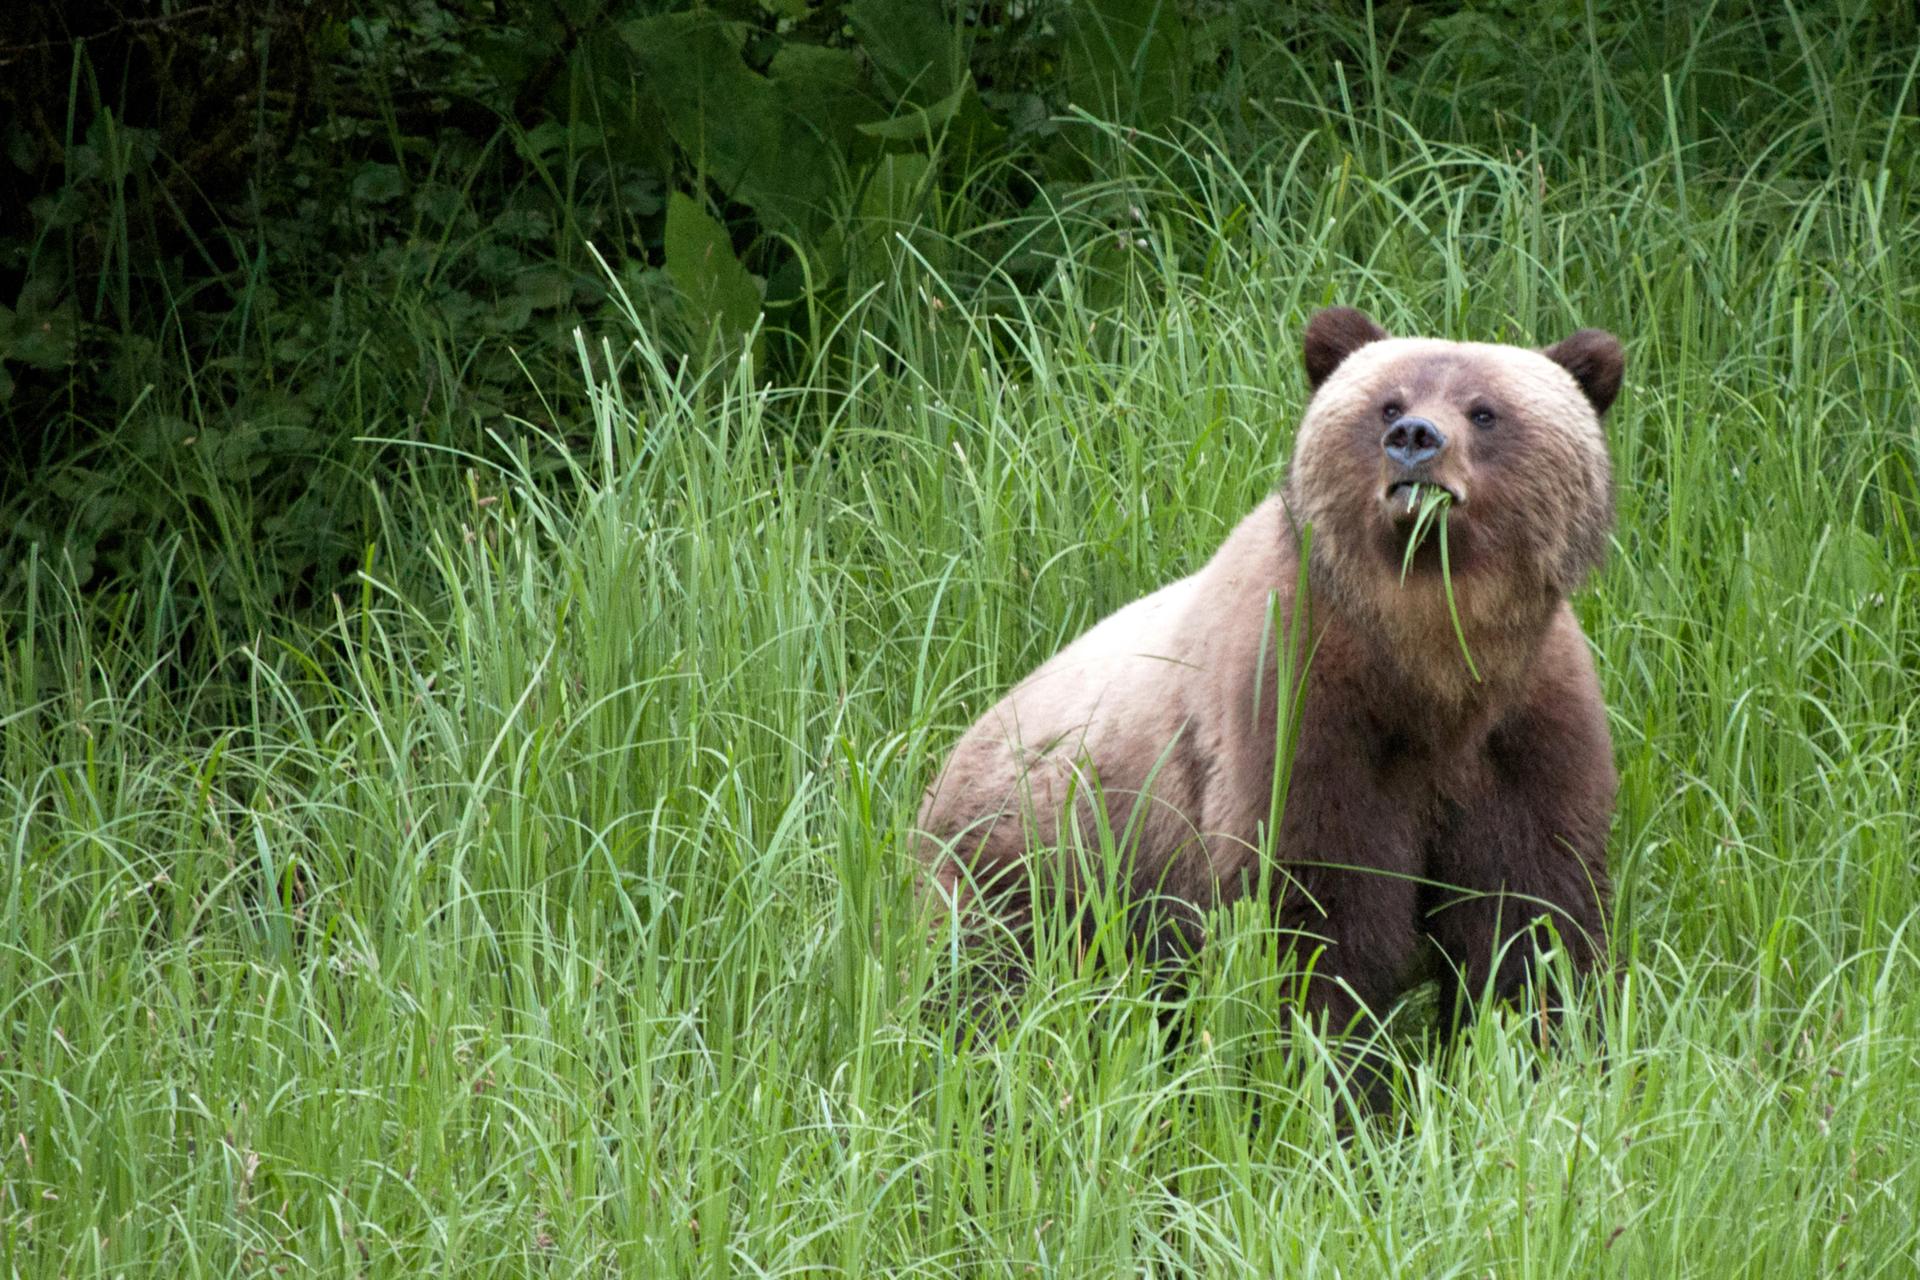 Bears in British Columbia